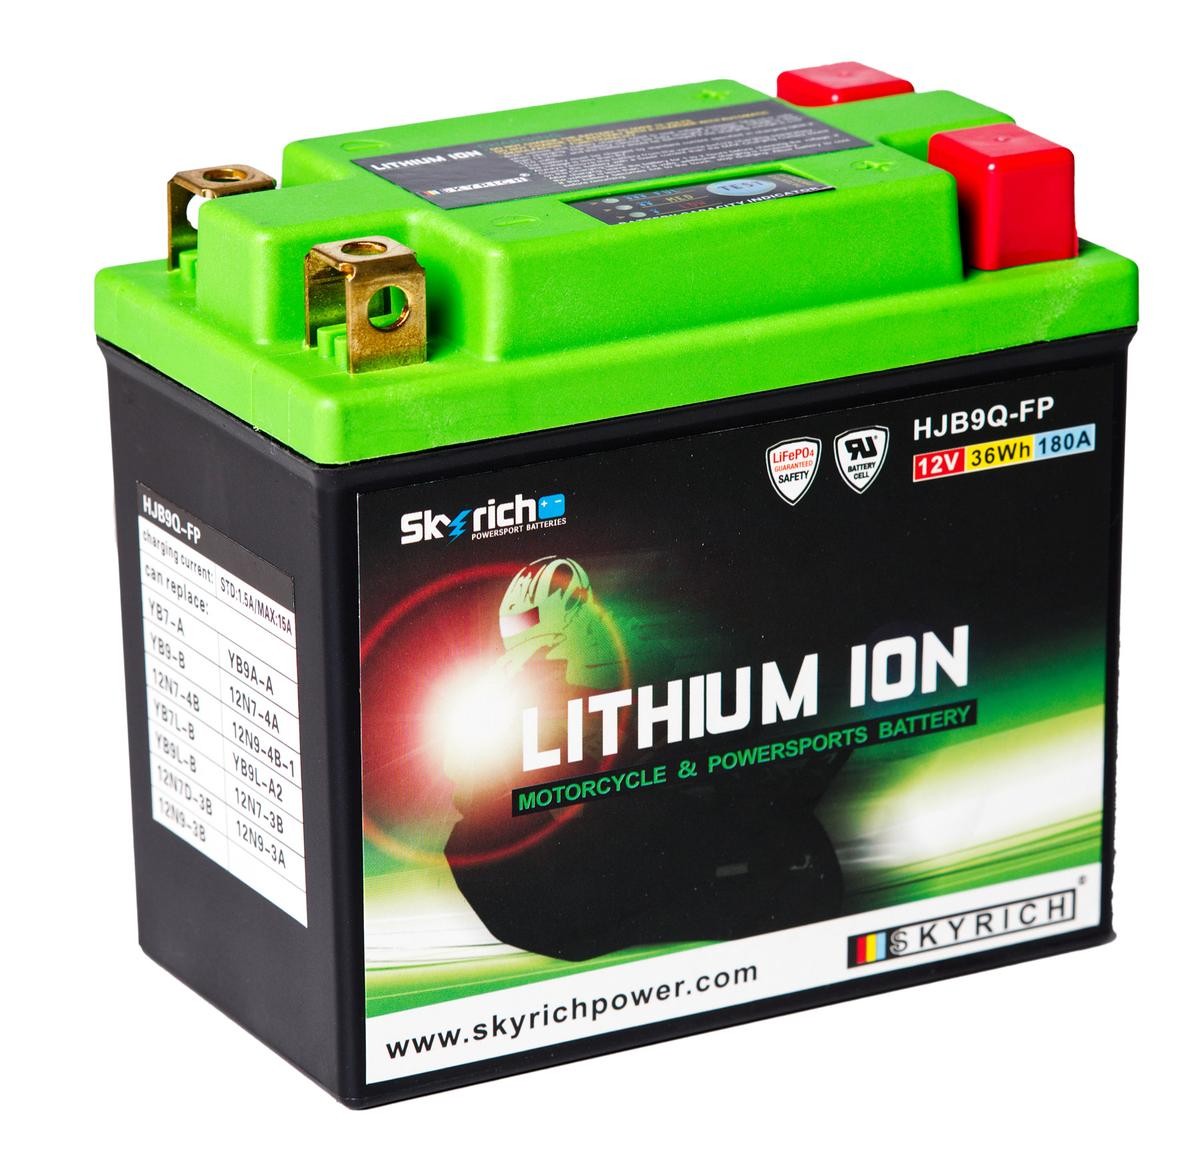 APRILIA PEGASO Batterie 12V 3Ah 180A N Li-Ionen-Batterie SKYRICH LITHIUM ION HJB9Q-FP